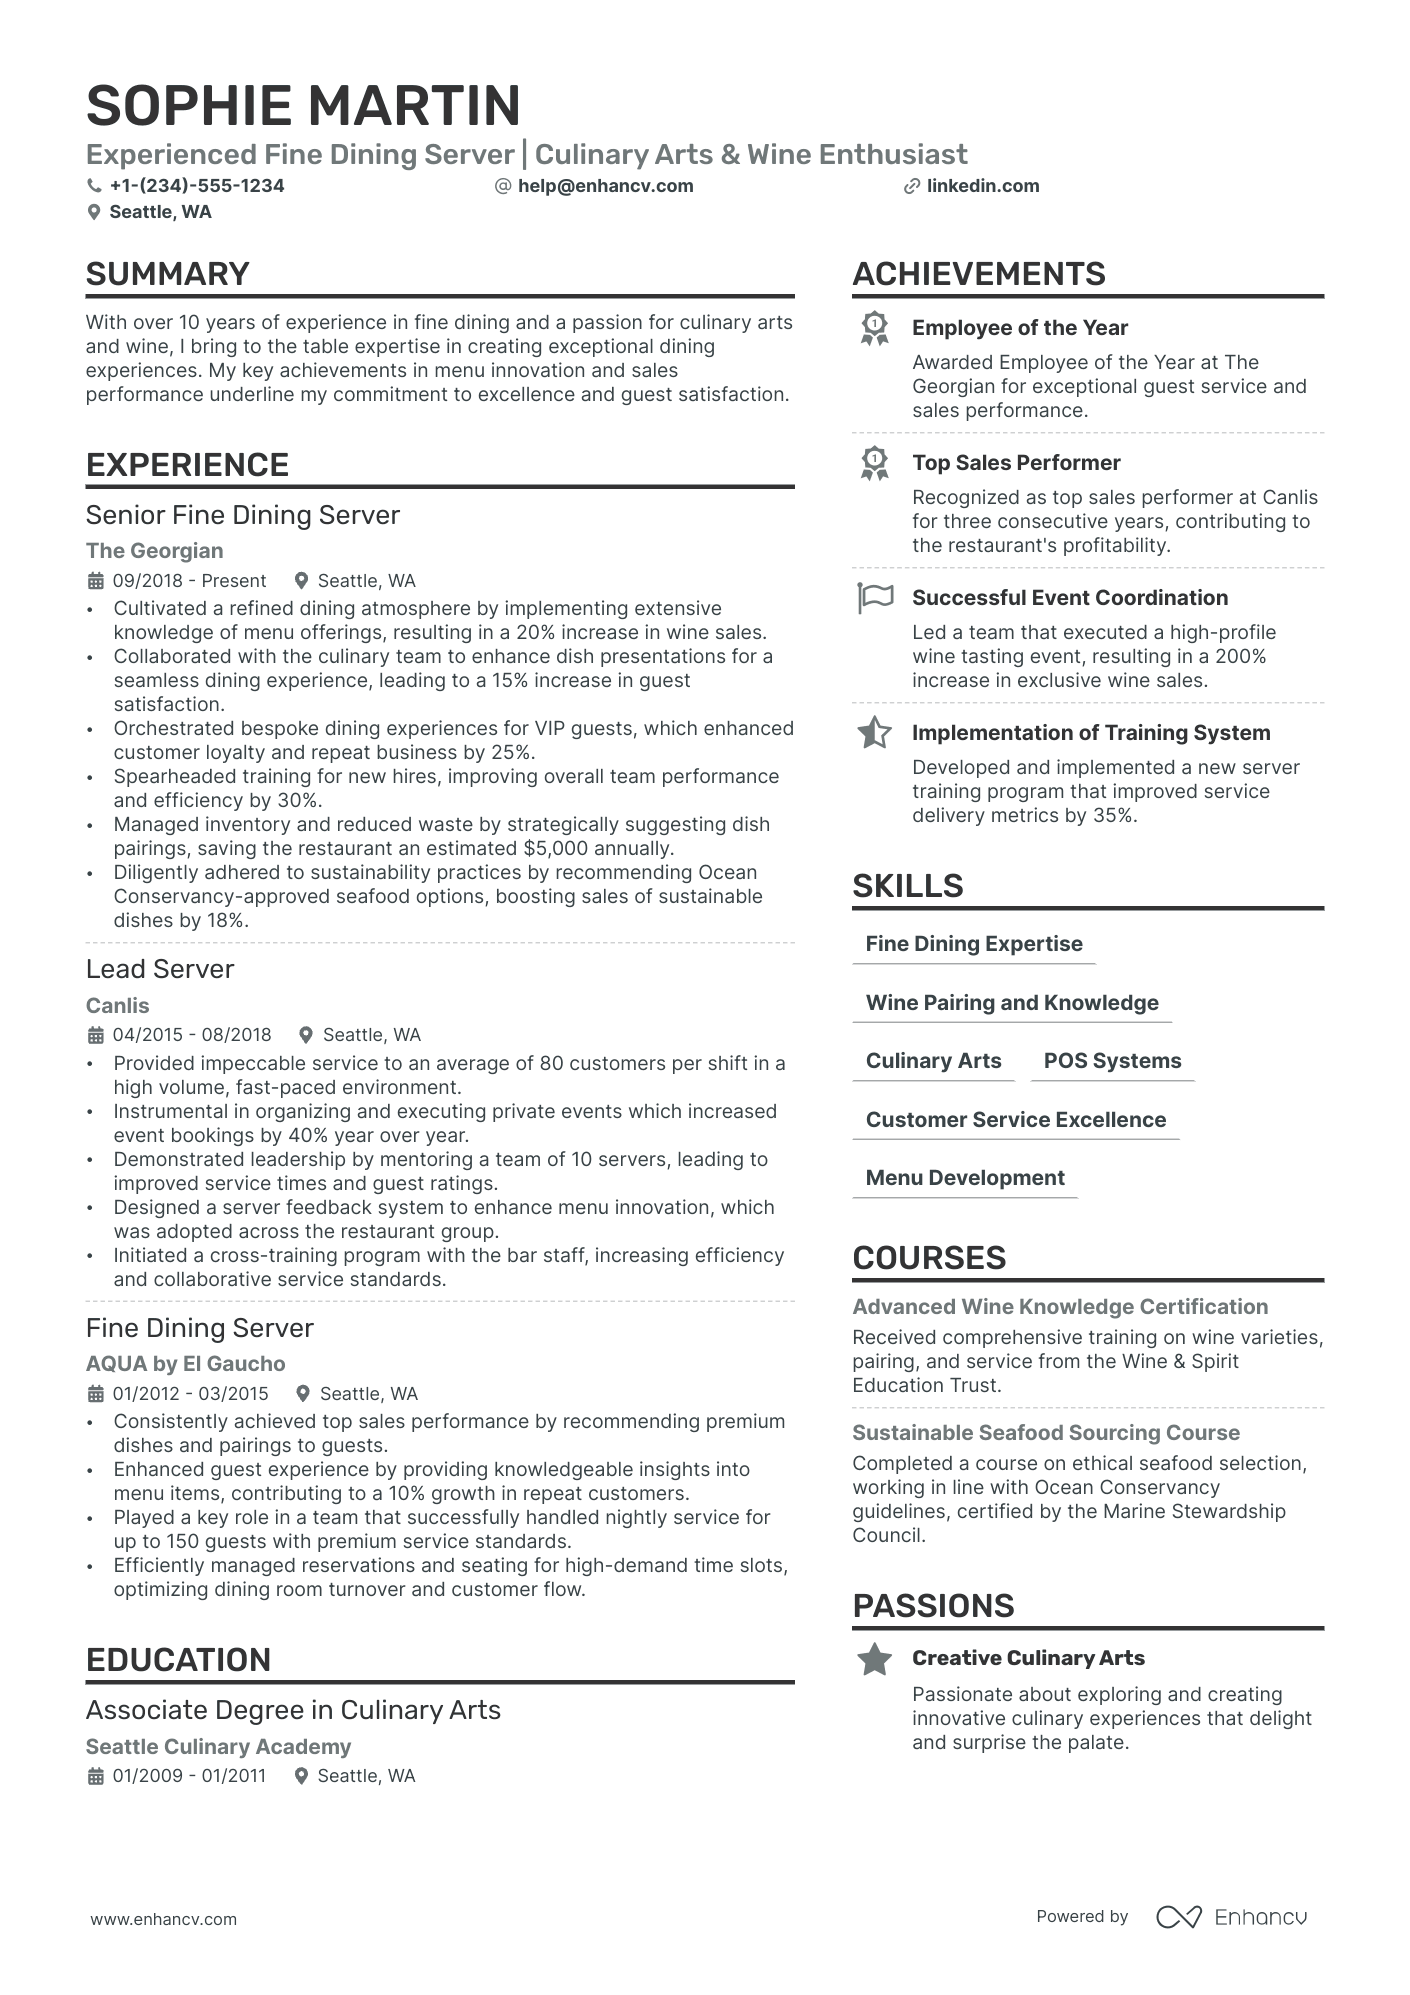 Fine Dining Server resume example